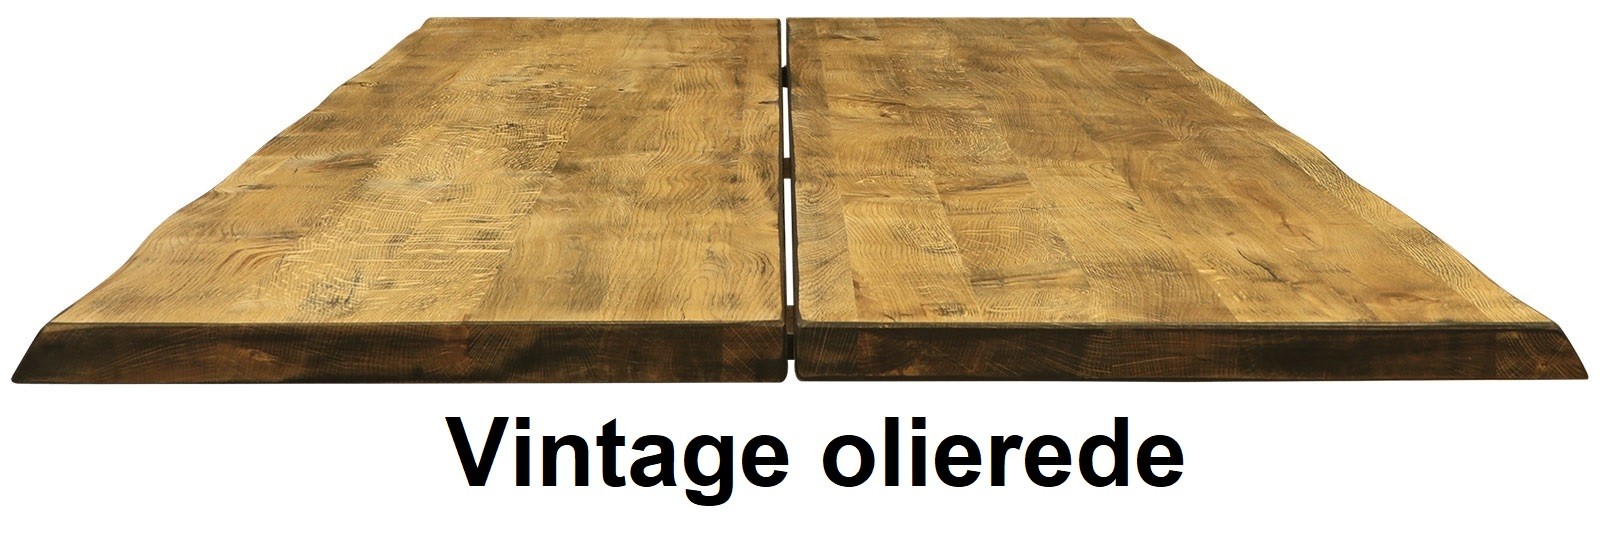 Vintage olierede plankebord